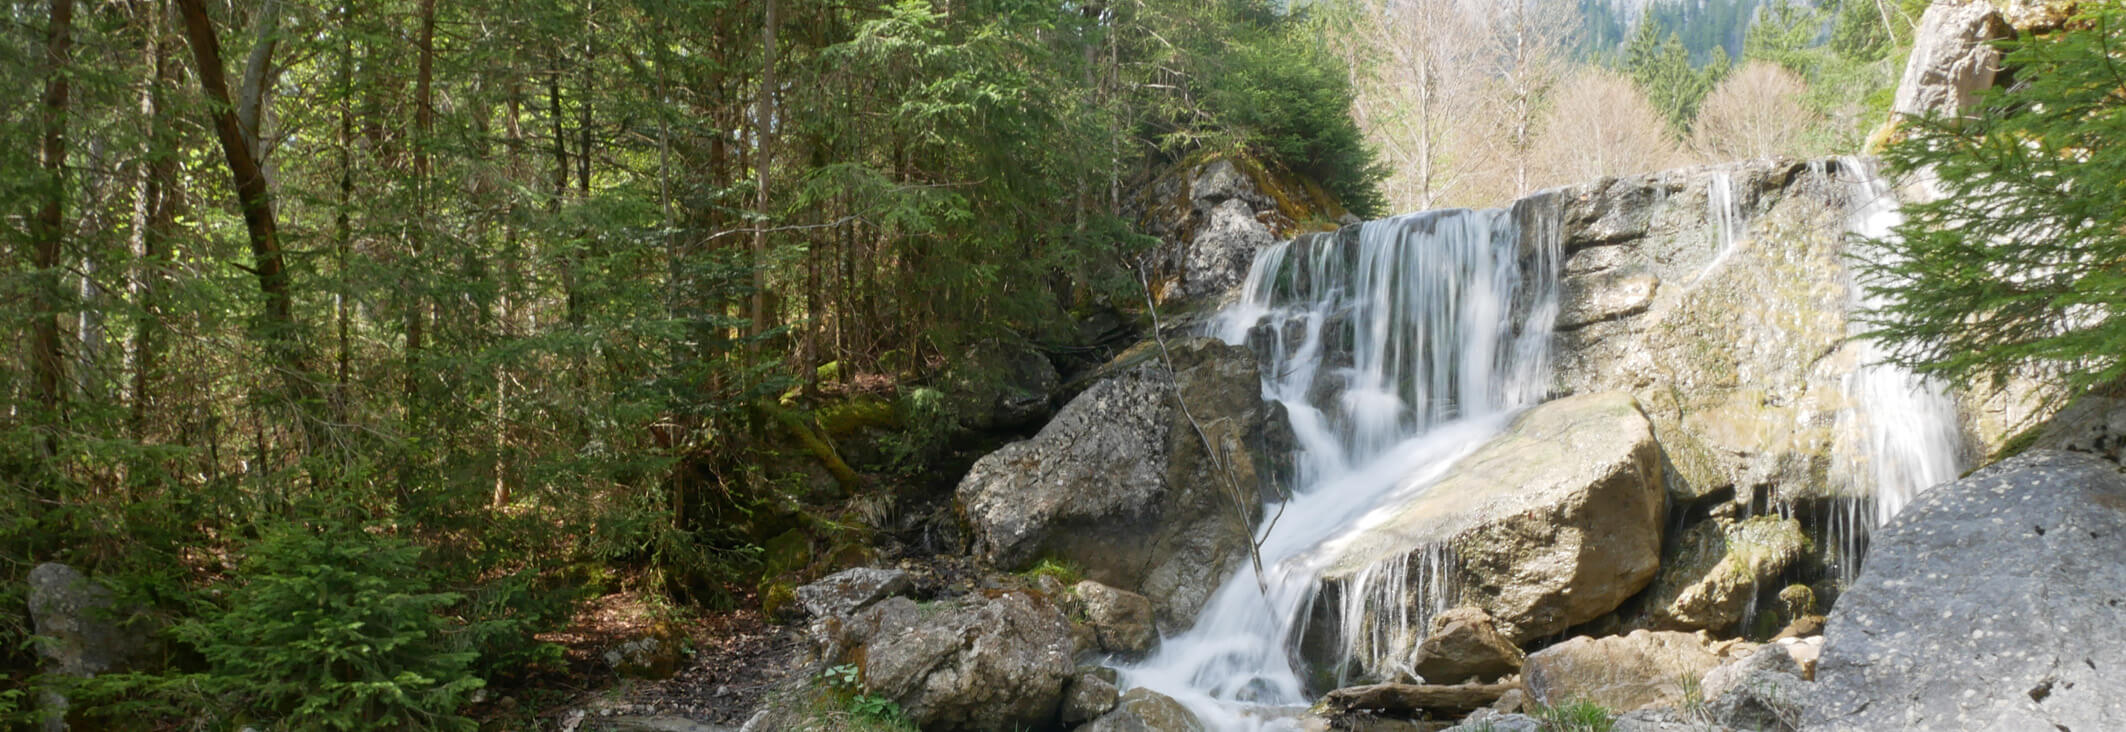 Brunnenkopf Linderhof Wasserfall